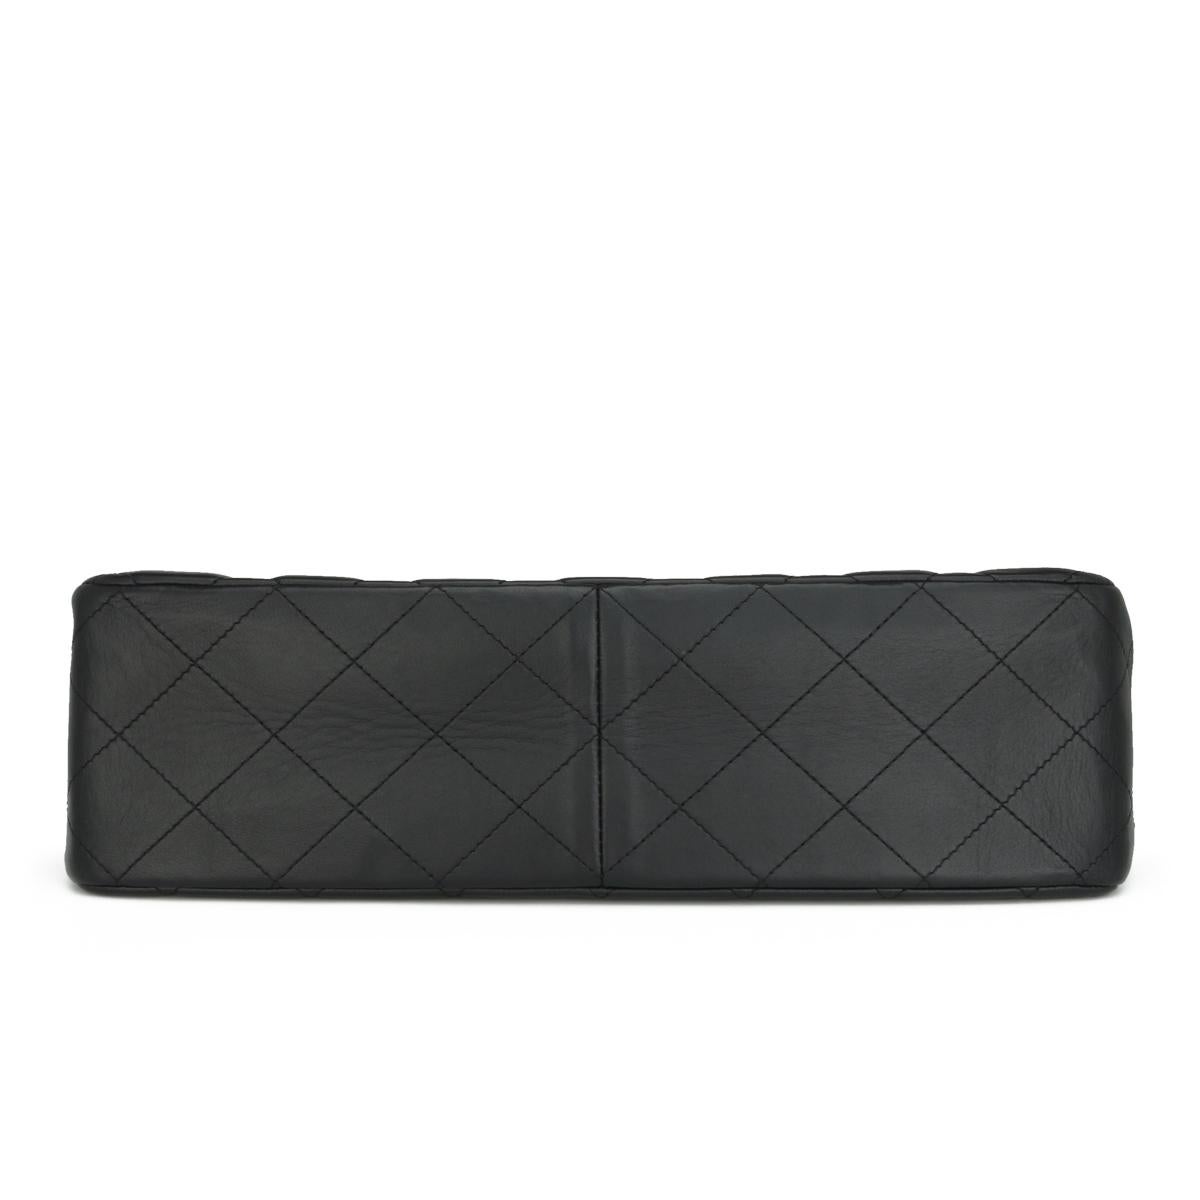 CHANEL Single Flap Jumbo Bag in Black Lambskin with Silver-Tone Hardware 2010 For Sale 3